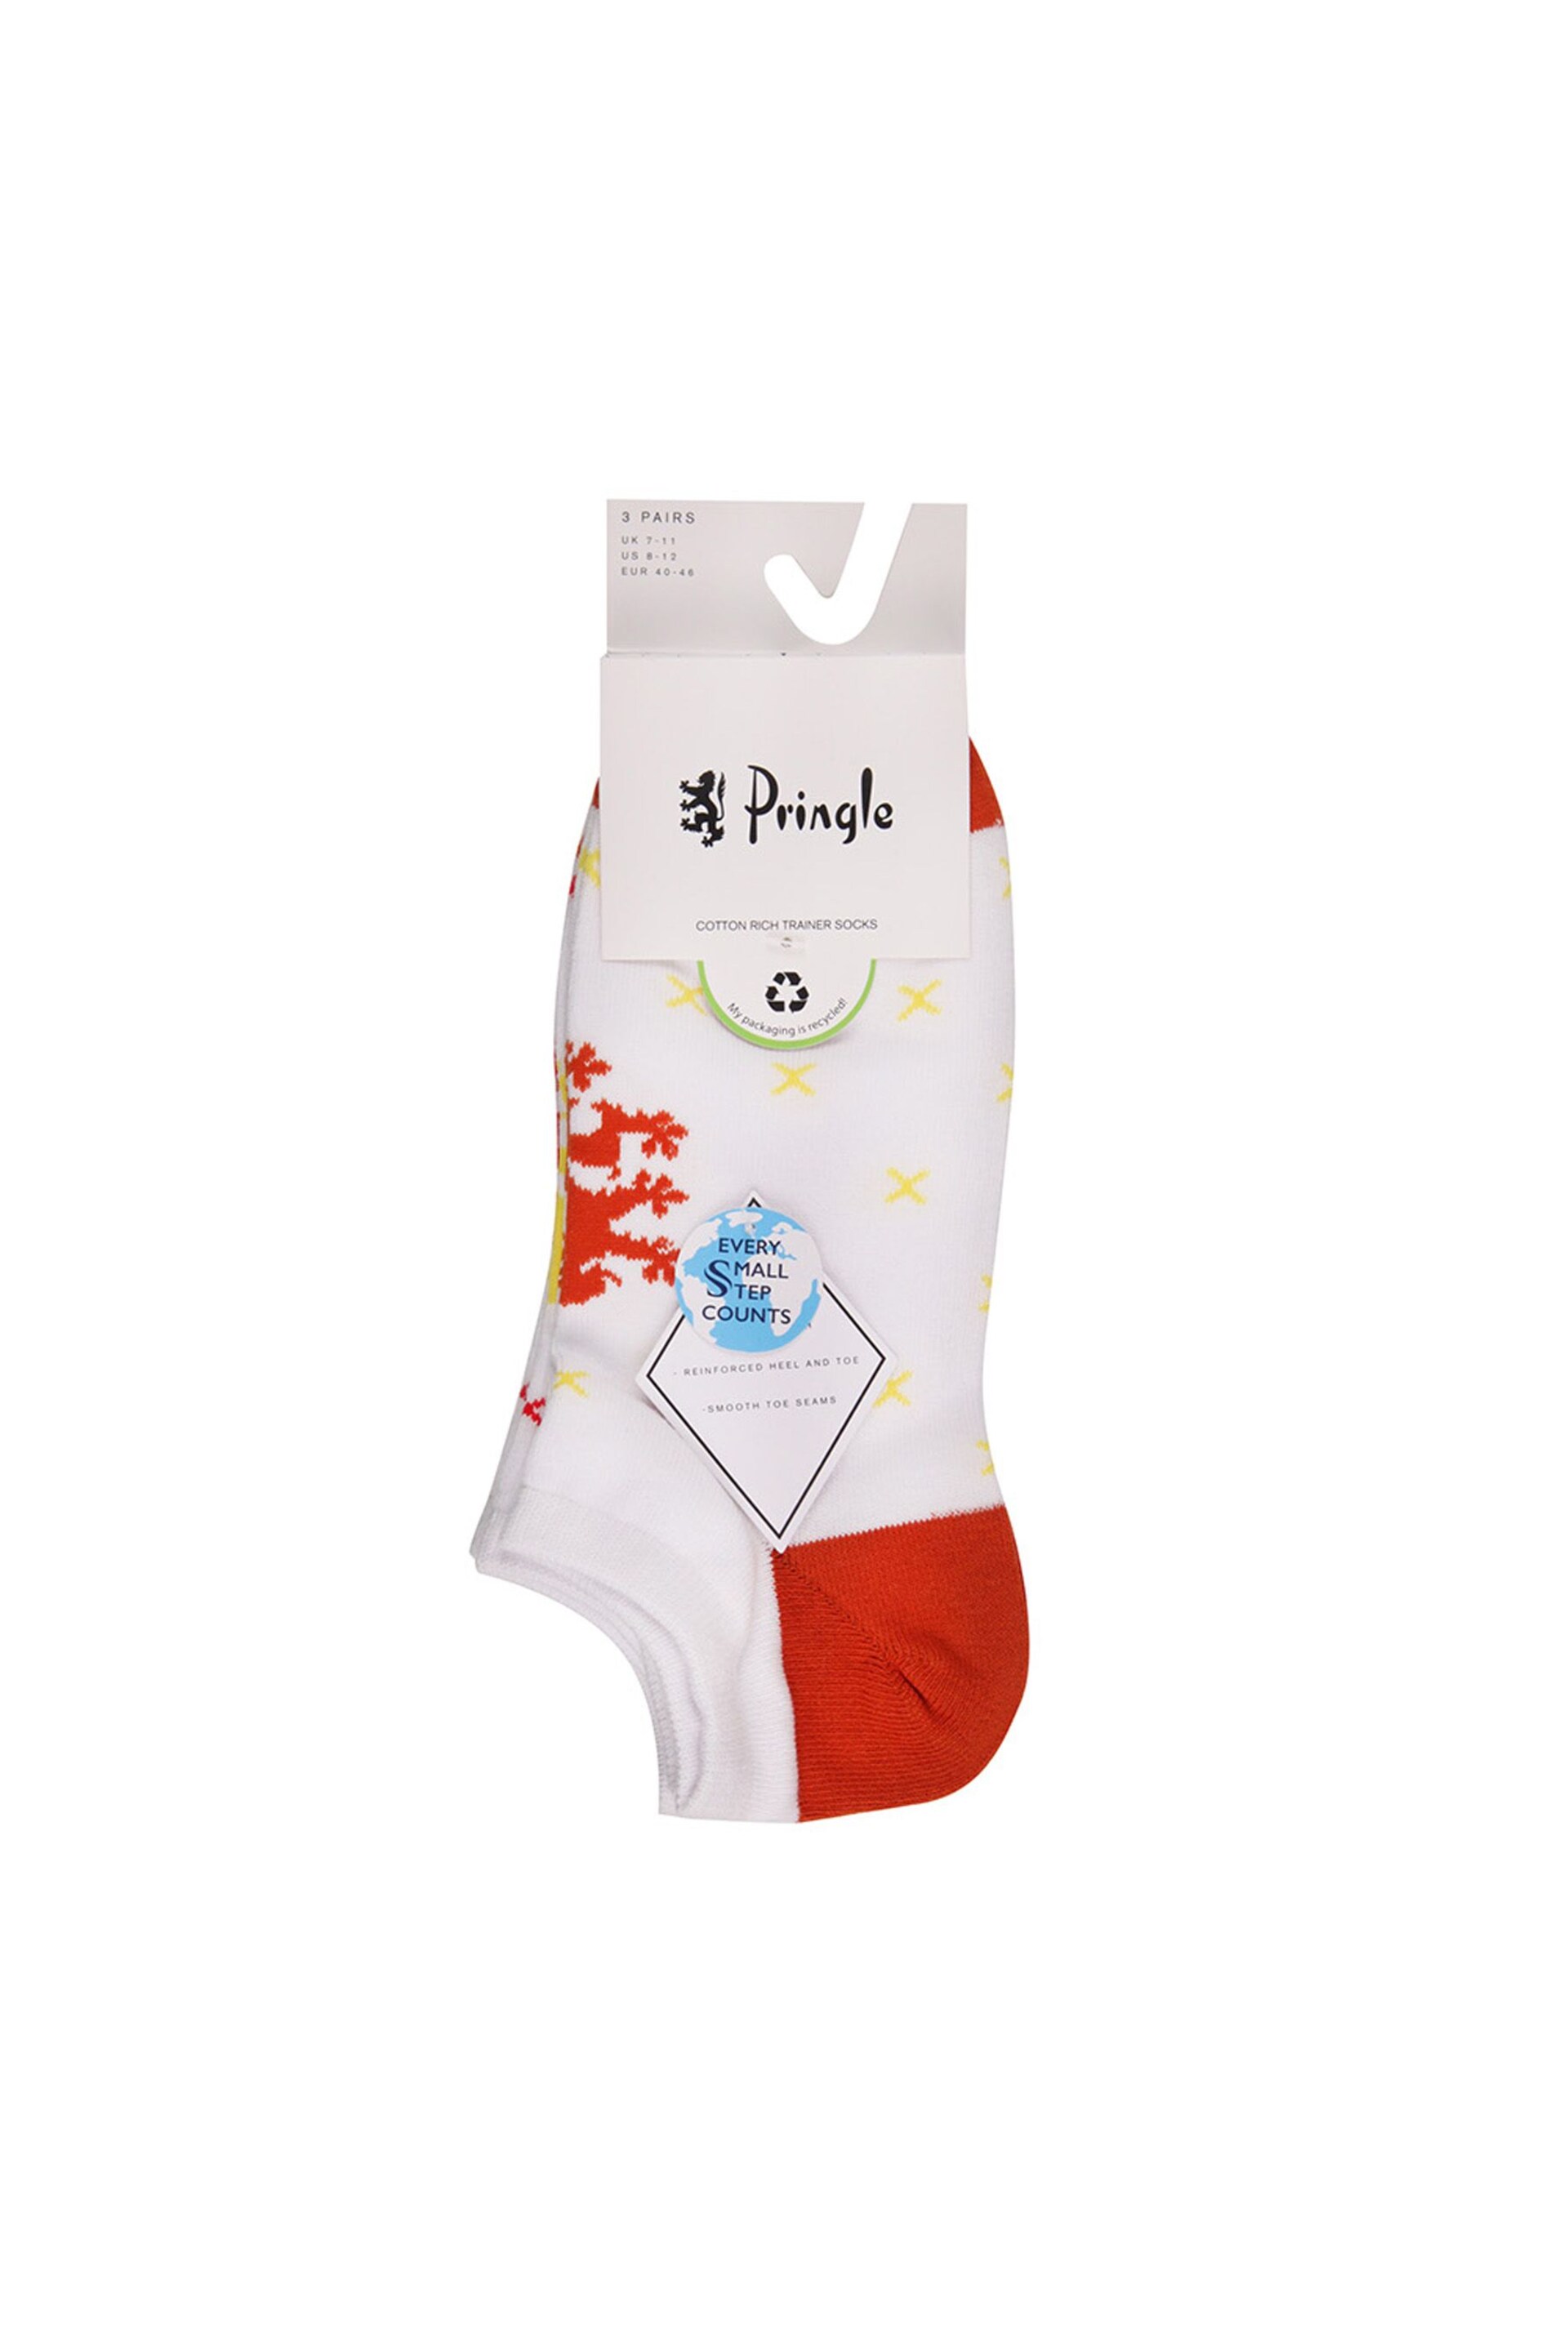 Pringle White Pop Colour Low Cut Trainer Socks - Image 4 of 4